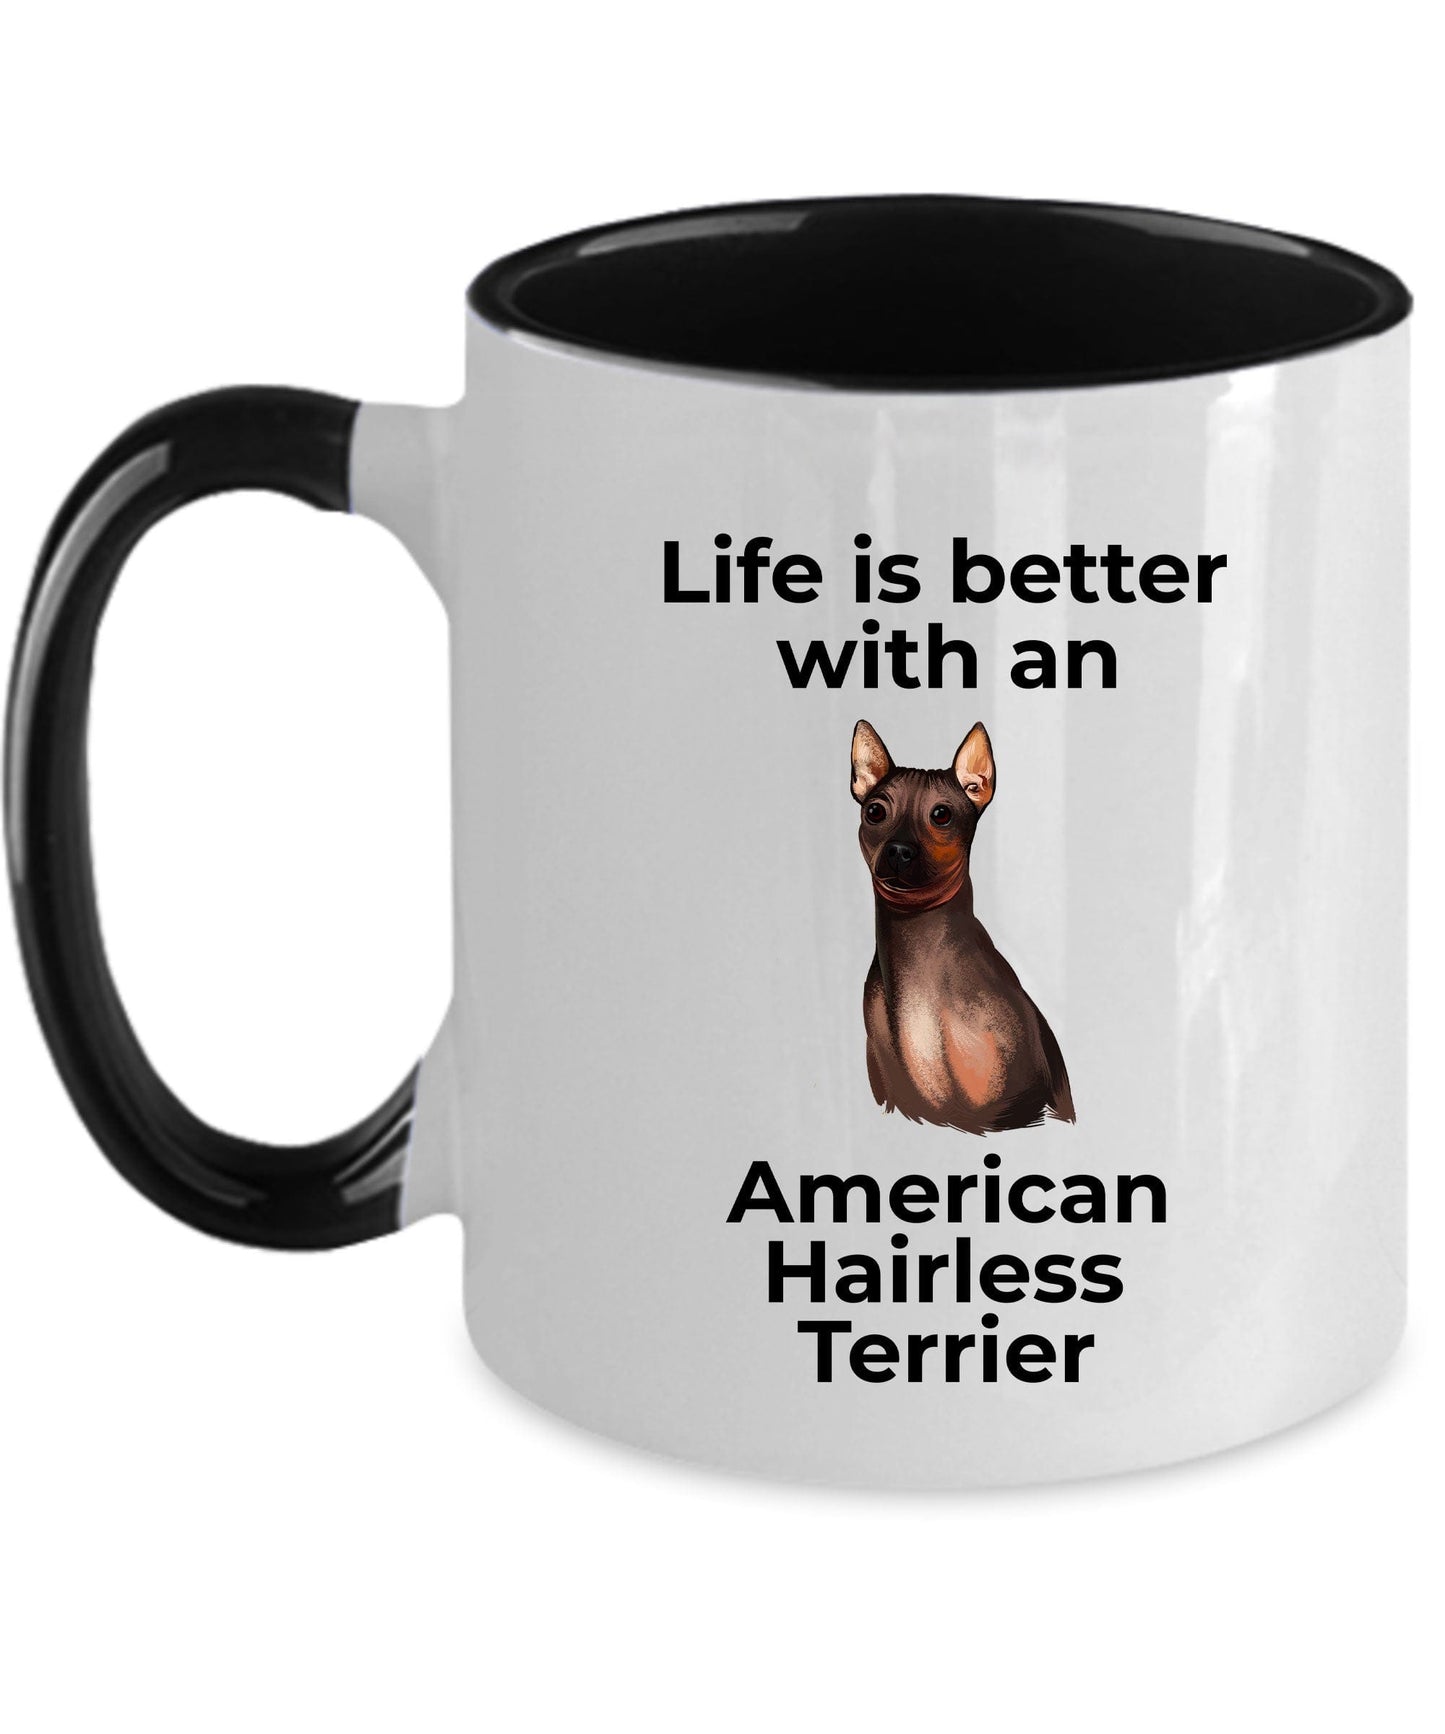 American Hairless Terrier Dog Coffee Mug - Life is better with an American Hairless Terrier